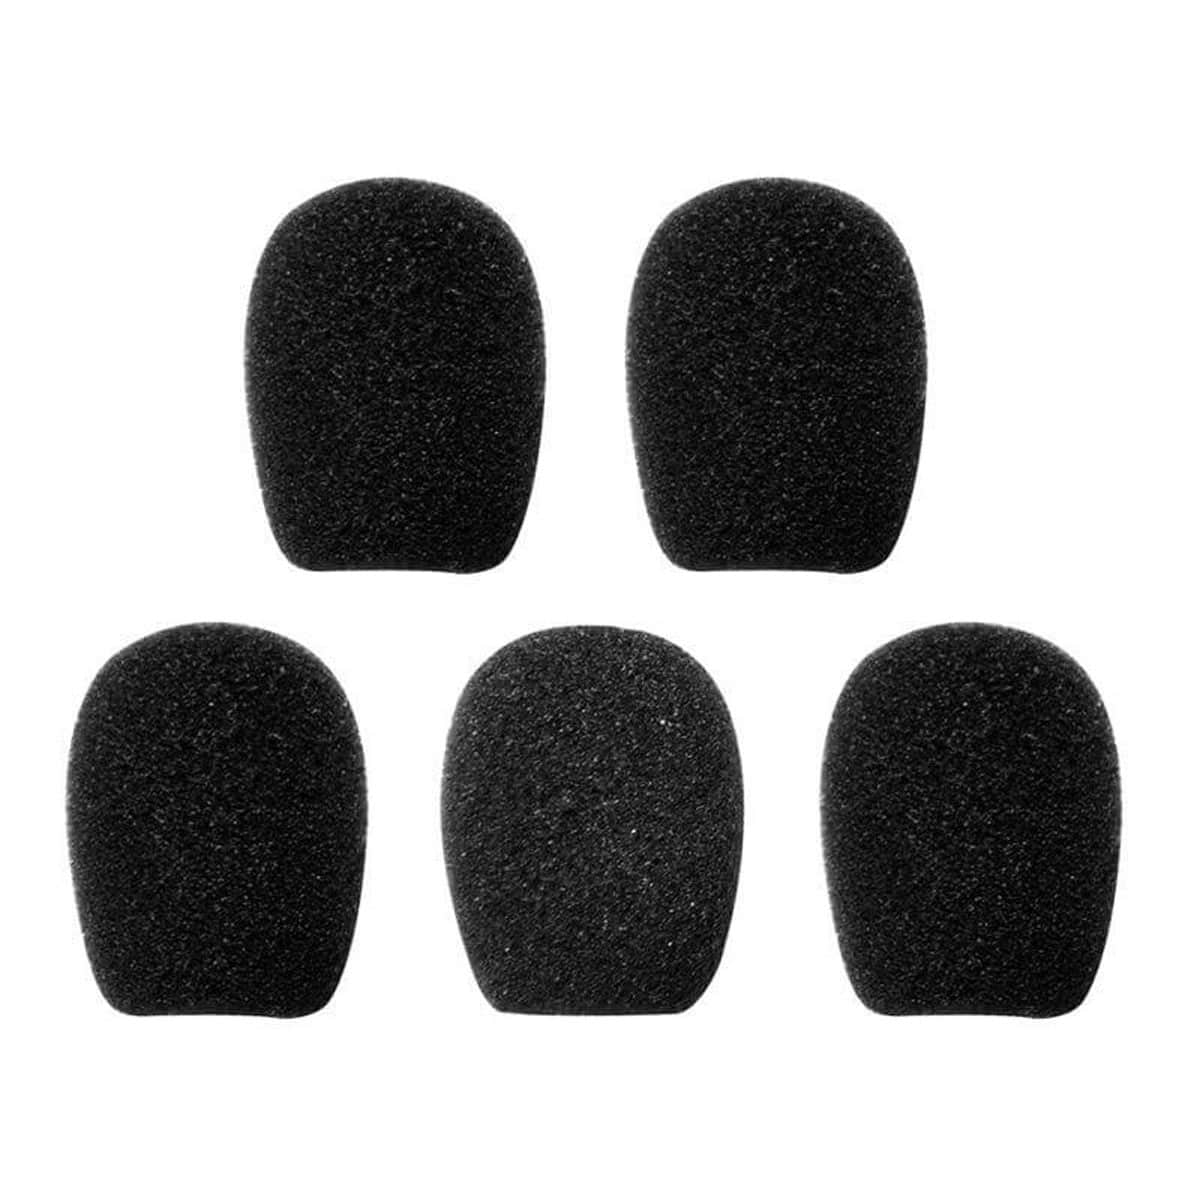 Microphone Sponges for Bluetooth Intercom Headsets 5-piece Set - Fits Sena models SMH5 SMH10 3S 10S 10R 20S 20S Evo 30K 50S 50C ST1 RT1